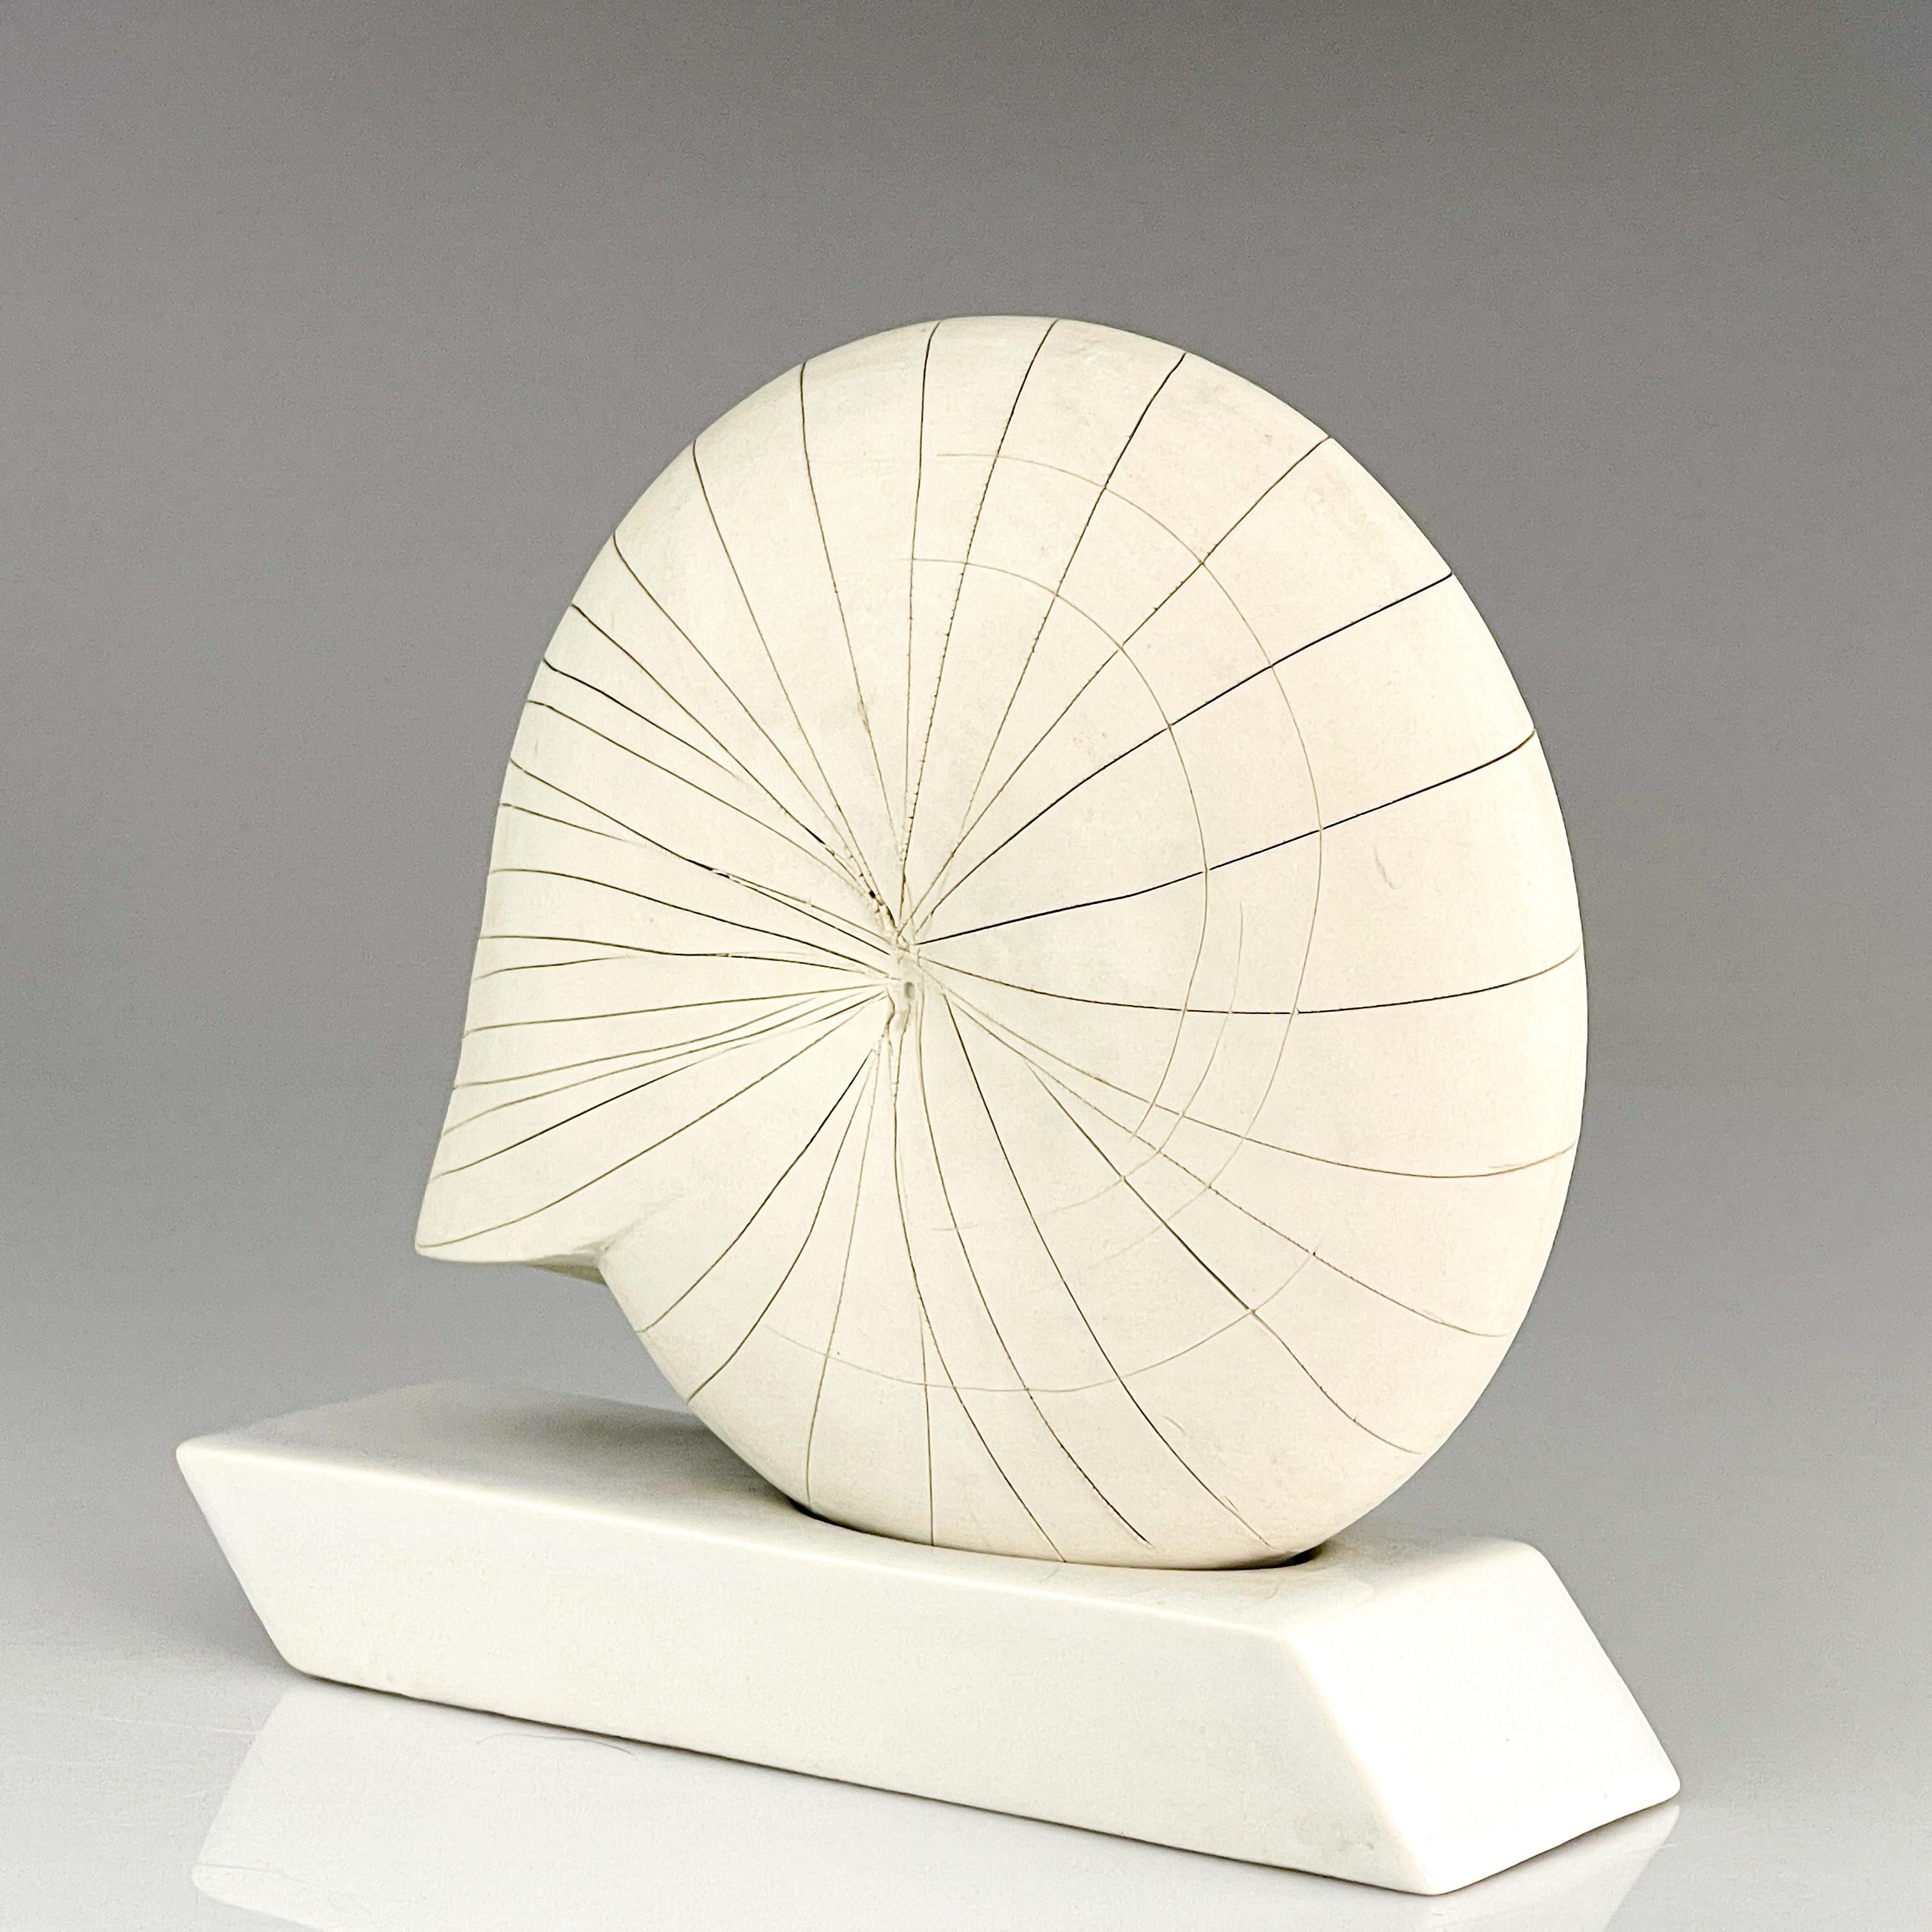 Late 20th Century Gunvor Olin-Grönqvist Scandinavian Modern Stoneware Sculpture Shell Handmade For Sale